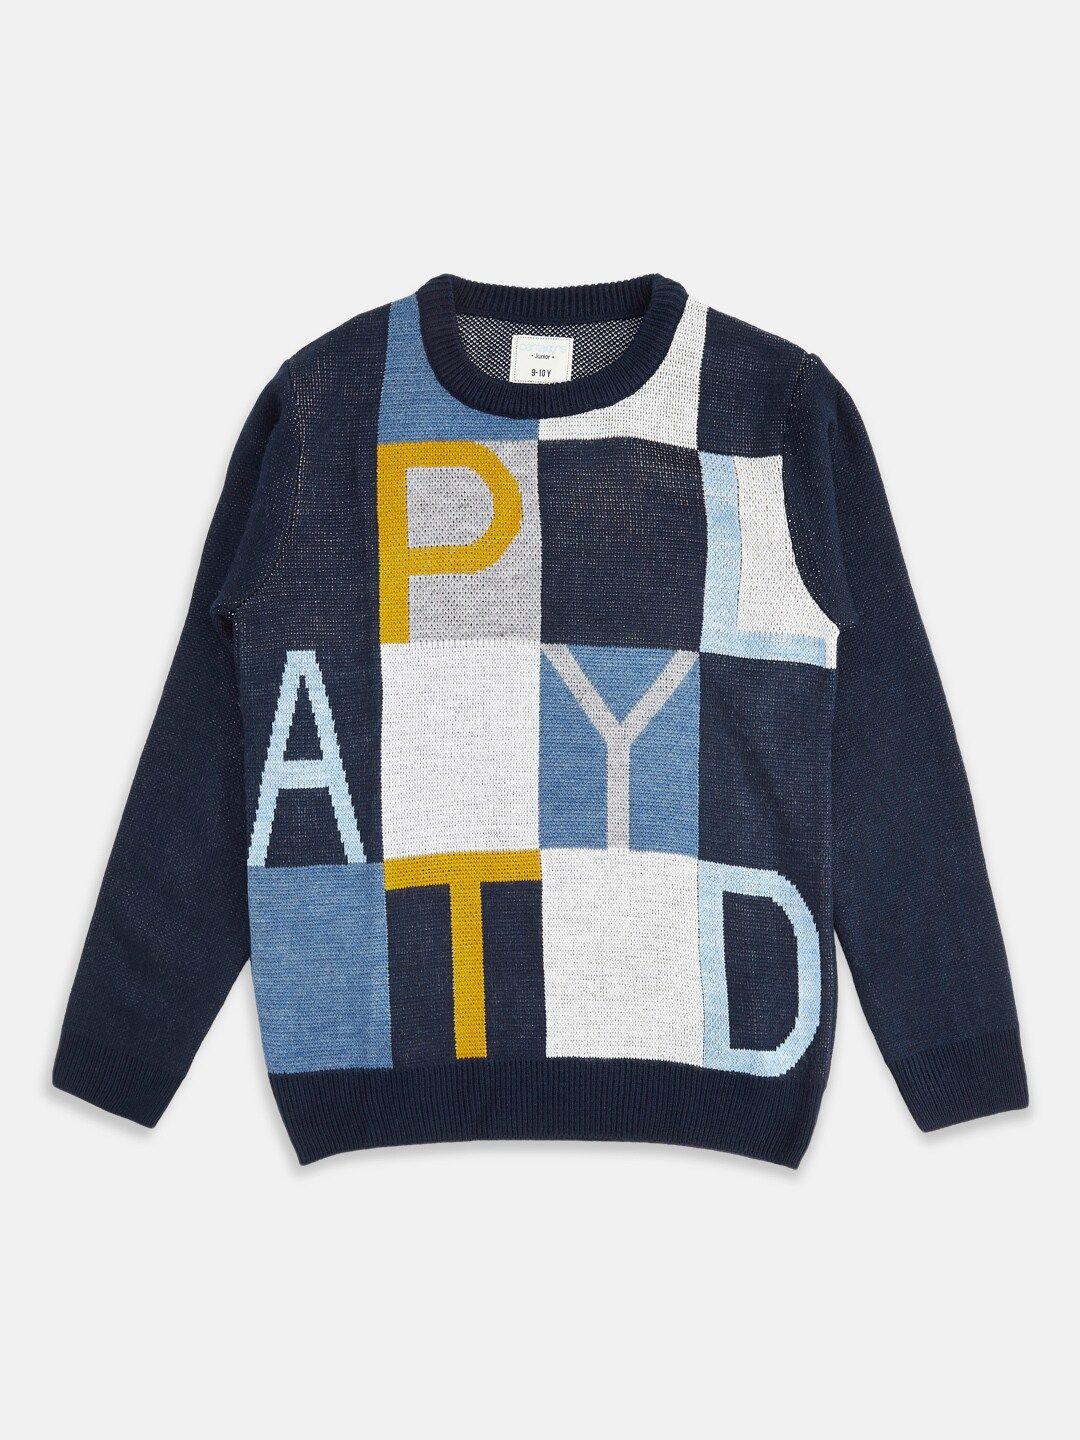 pantaloons junior boys navy blue & grey typography acrylic printed pullover